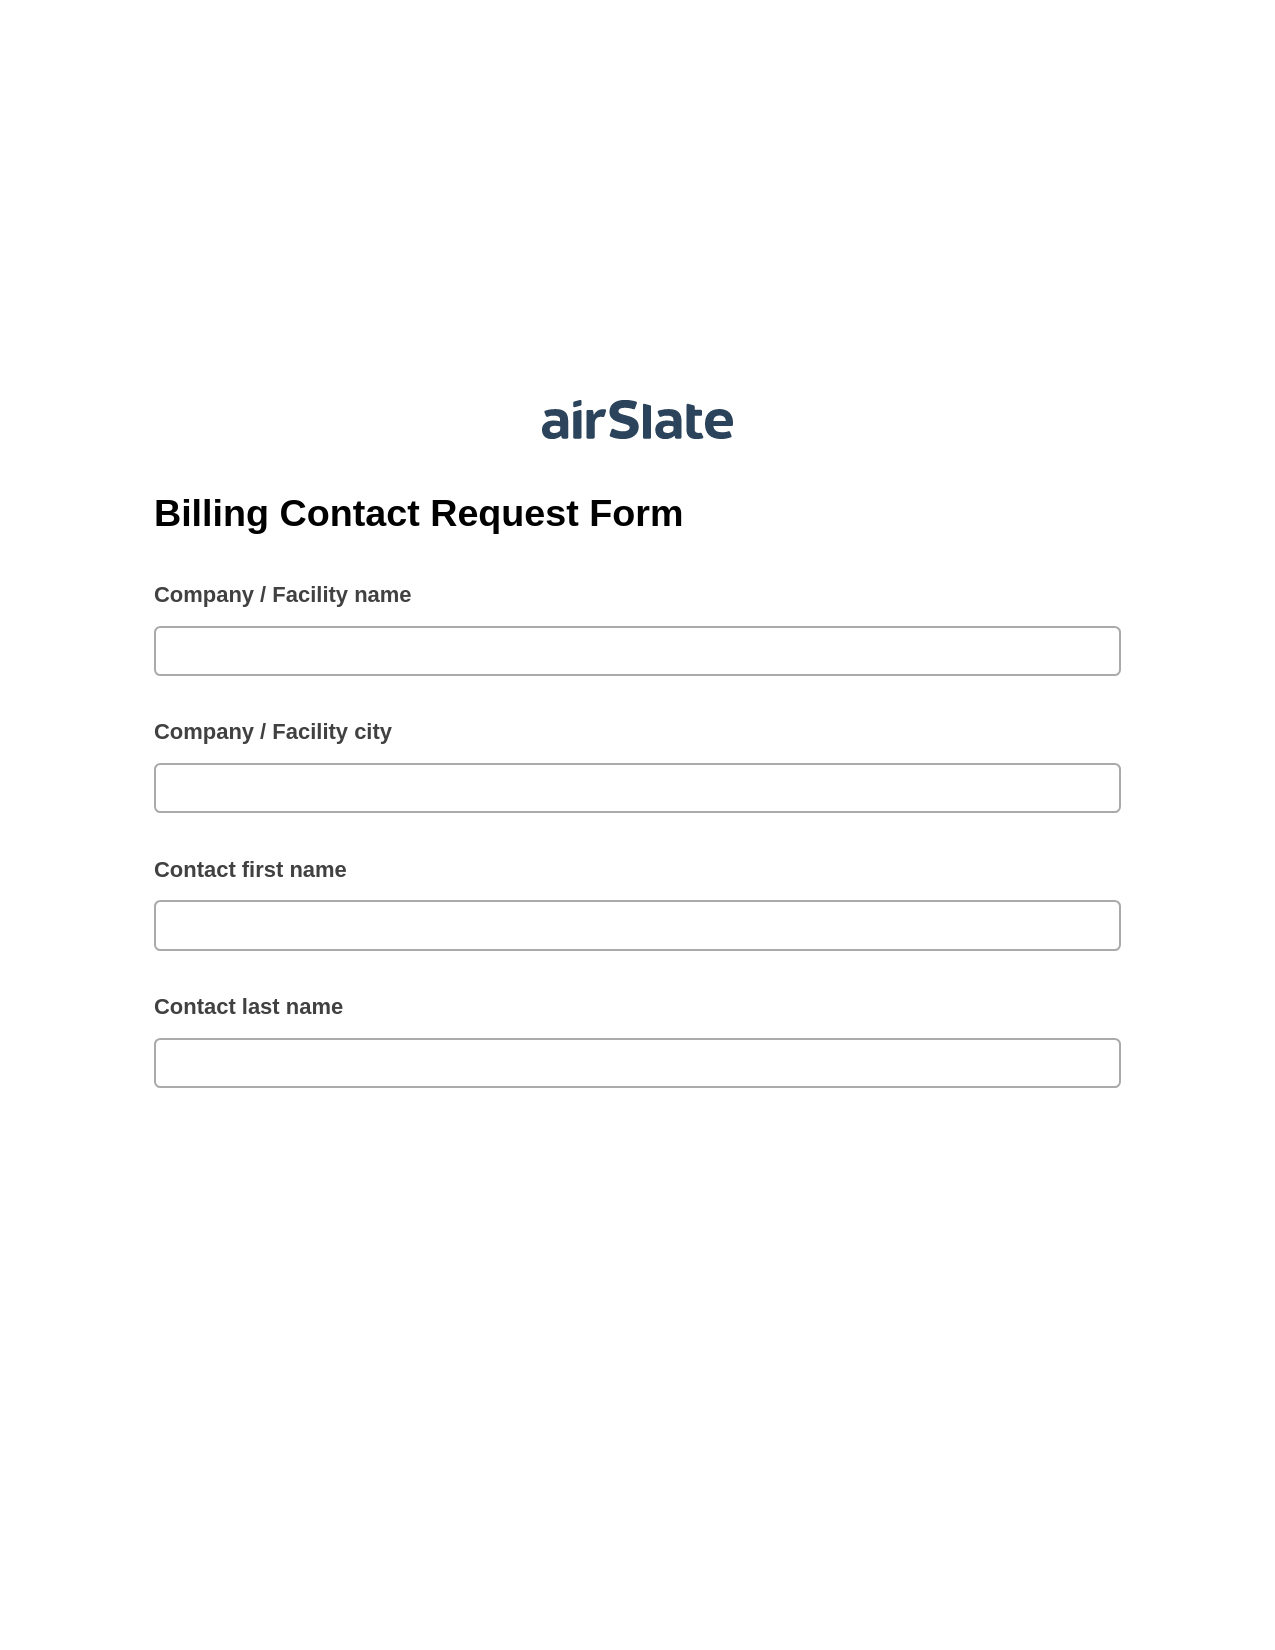 Multirole Billing Contact Request Form Pre-fill Document Bot, Webhook Bot, Webhook Postfinish Bot